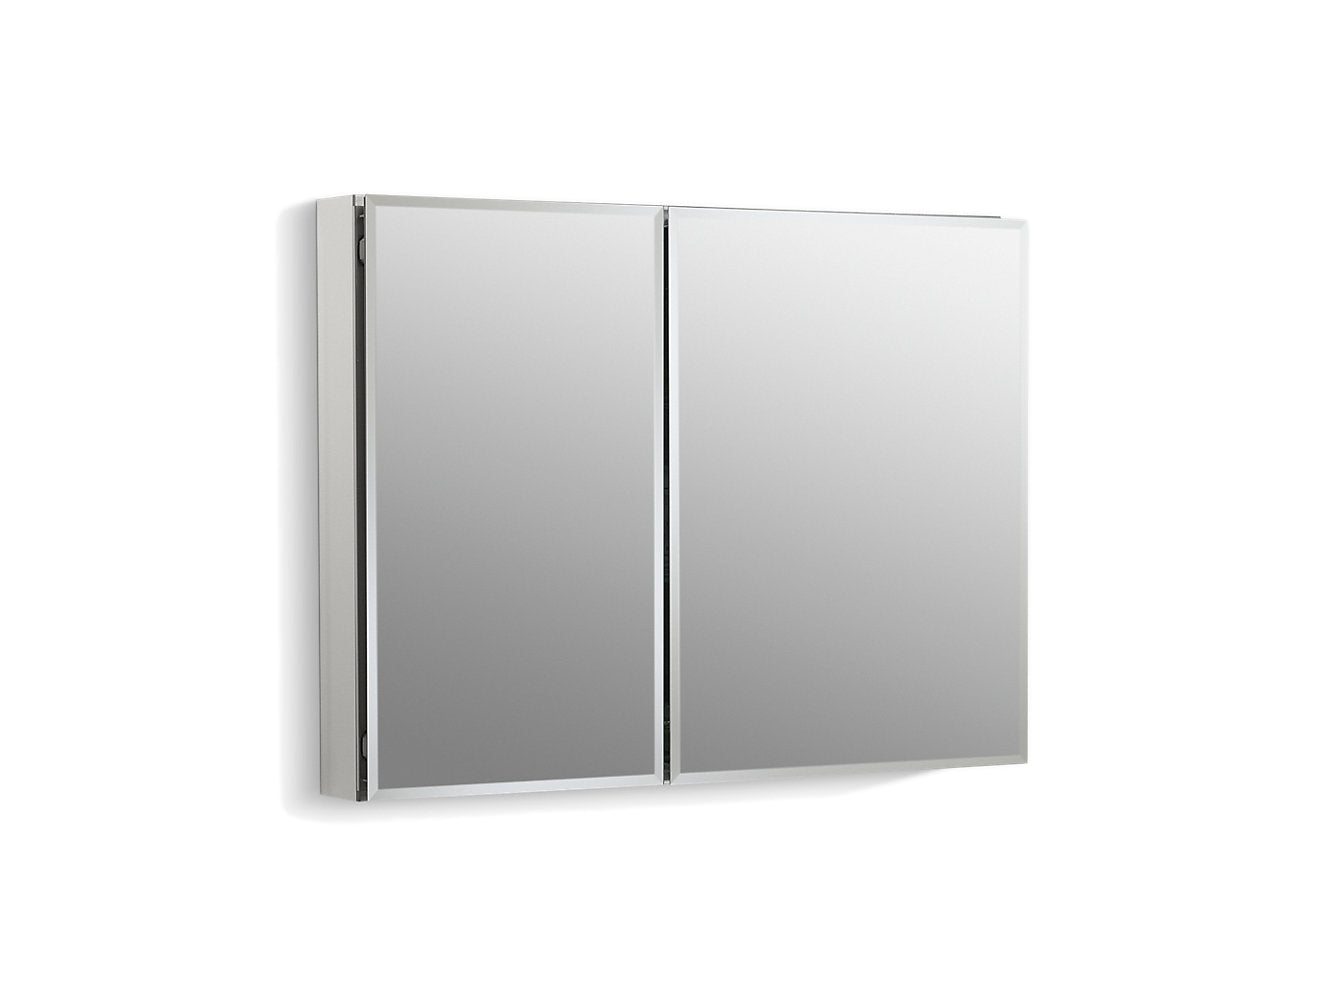 Kohler 35" W x 26" H Aluminum Two Door Medicine Cabinet With Mirrored Doors Beveled Edges